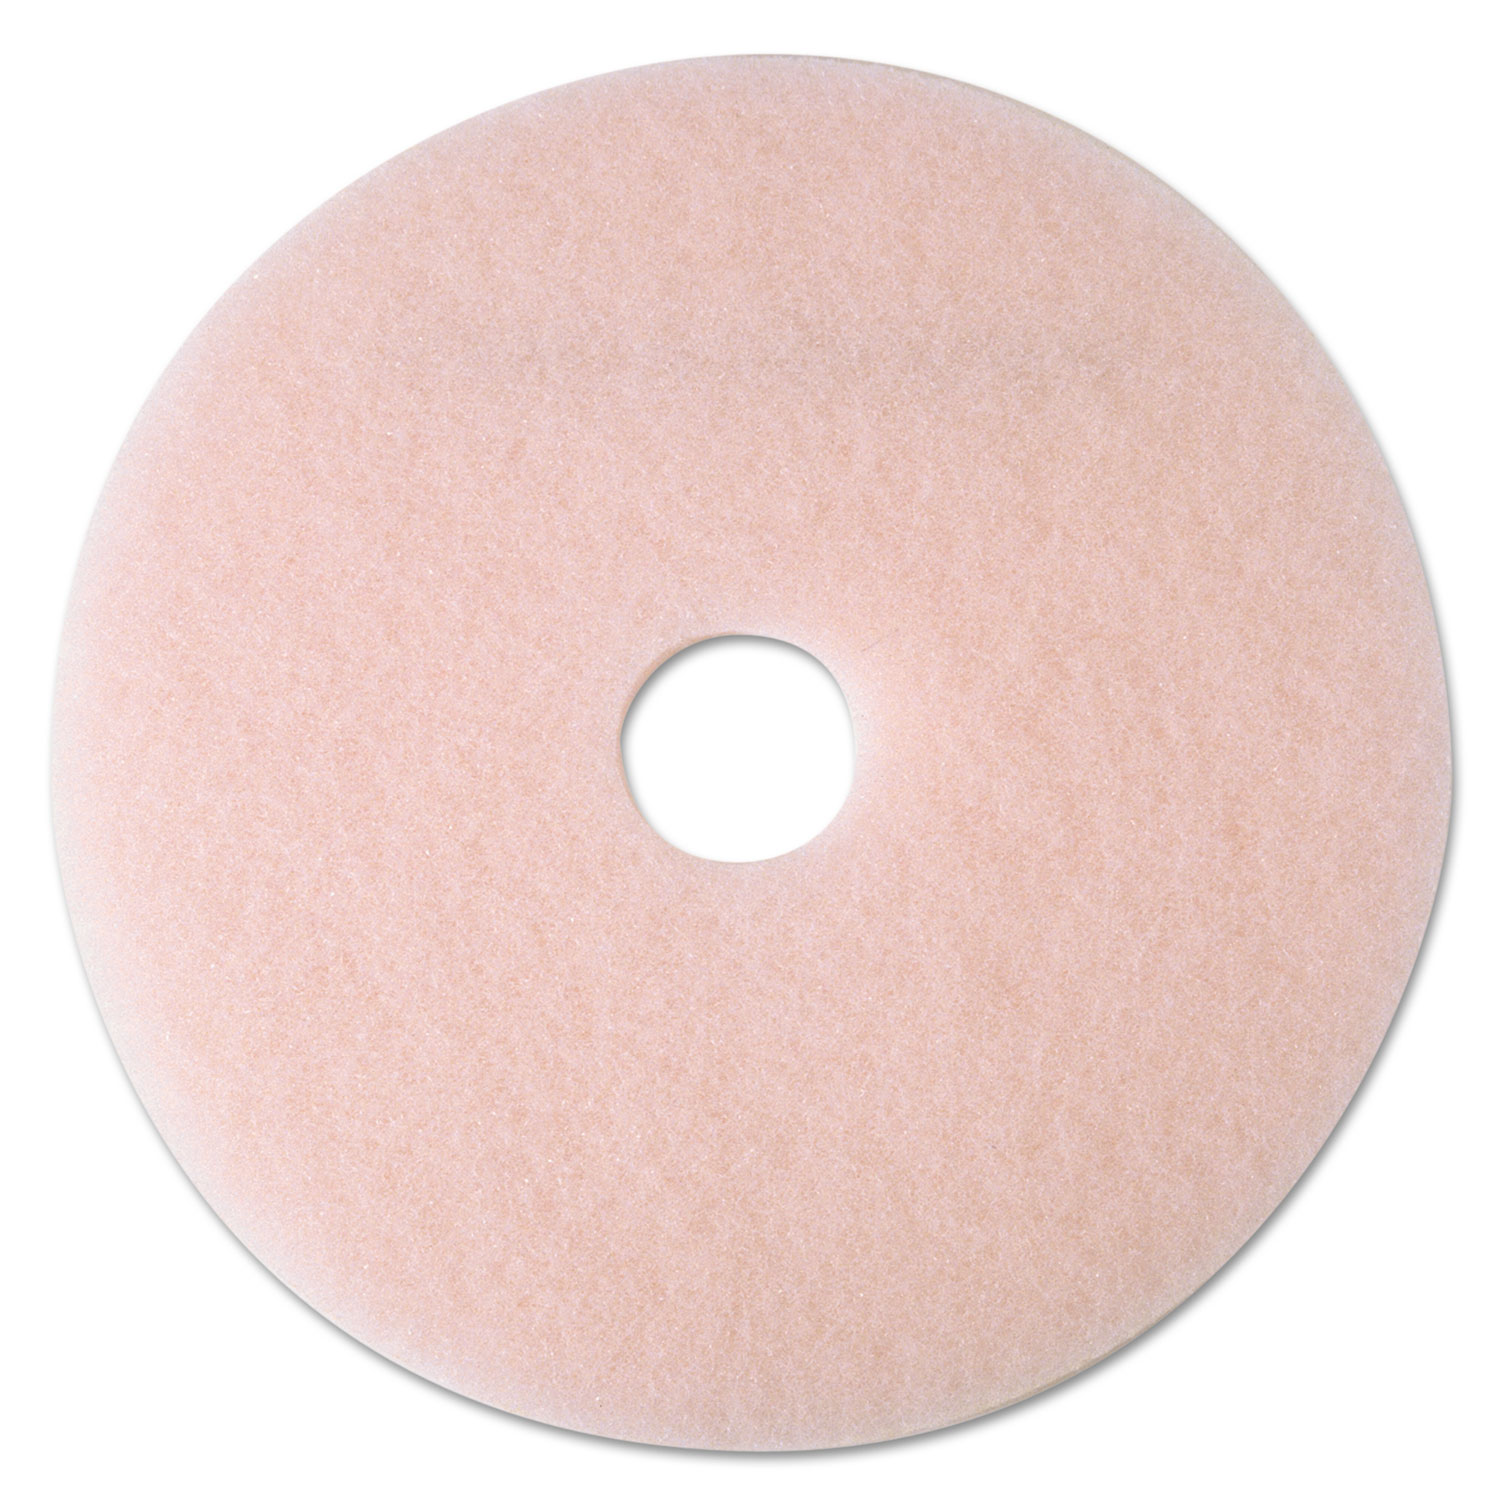  3M 3600 Ultra High-Speed Eraser Floor Burnishing Pad 3600, 24 Diameter, Pink, 5/Carton (MMM25861) 